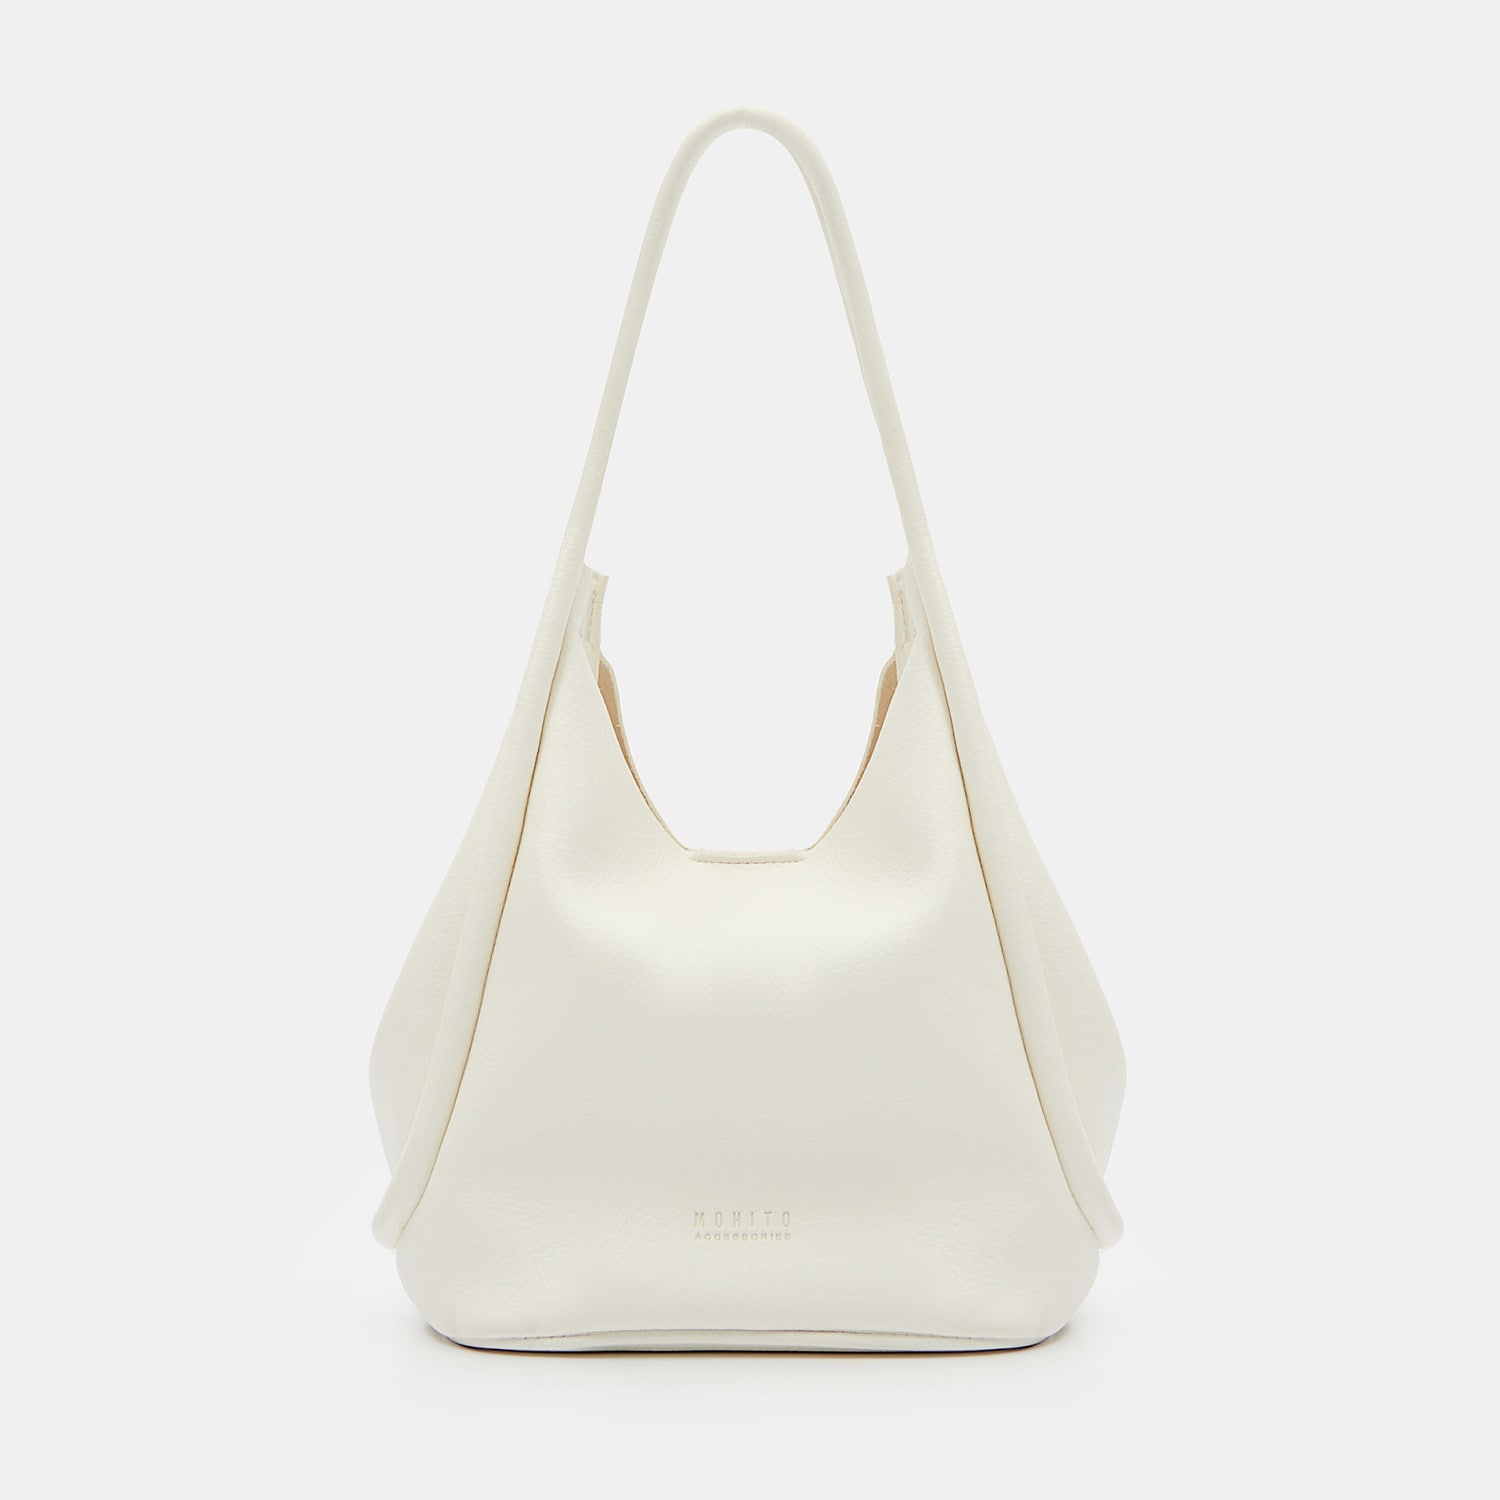 Mohito – Geantă albă tip sac – Alb Accessories > bags 2023-09-24